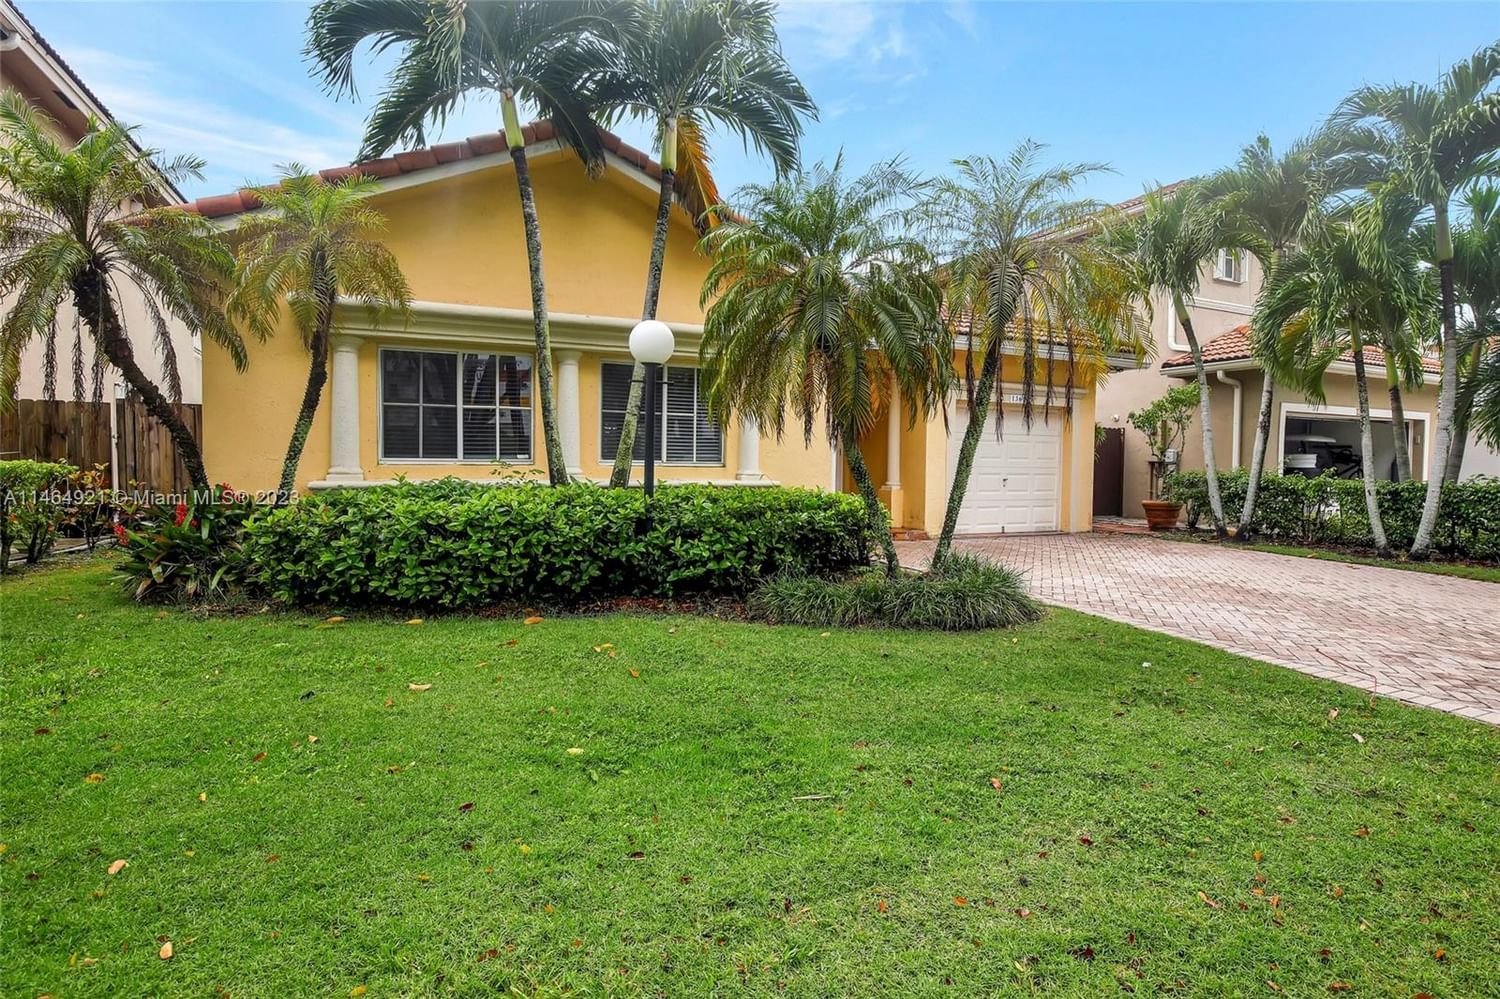 Real estate property located at 13600 136th Ter, Miami-Dade County, Miami, FL